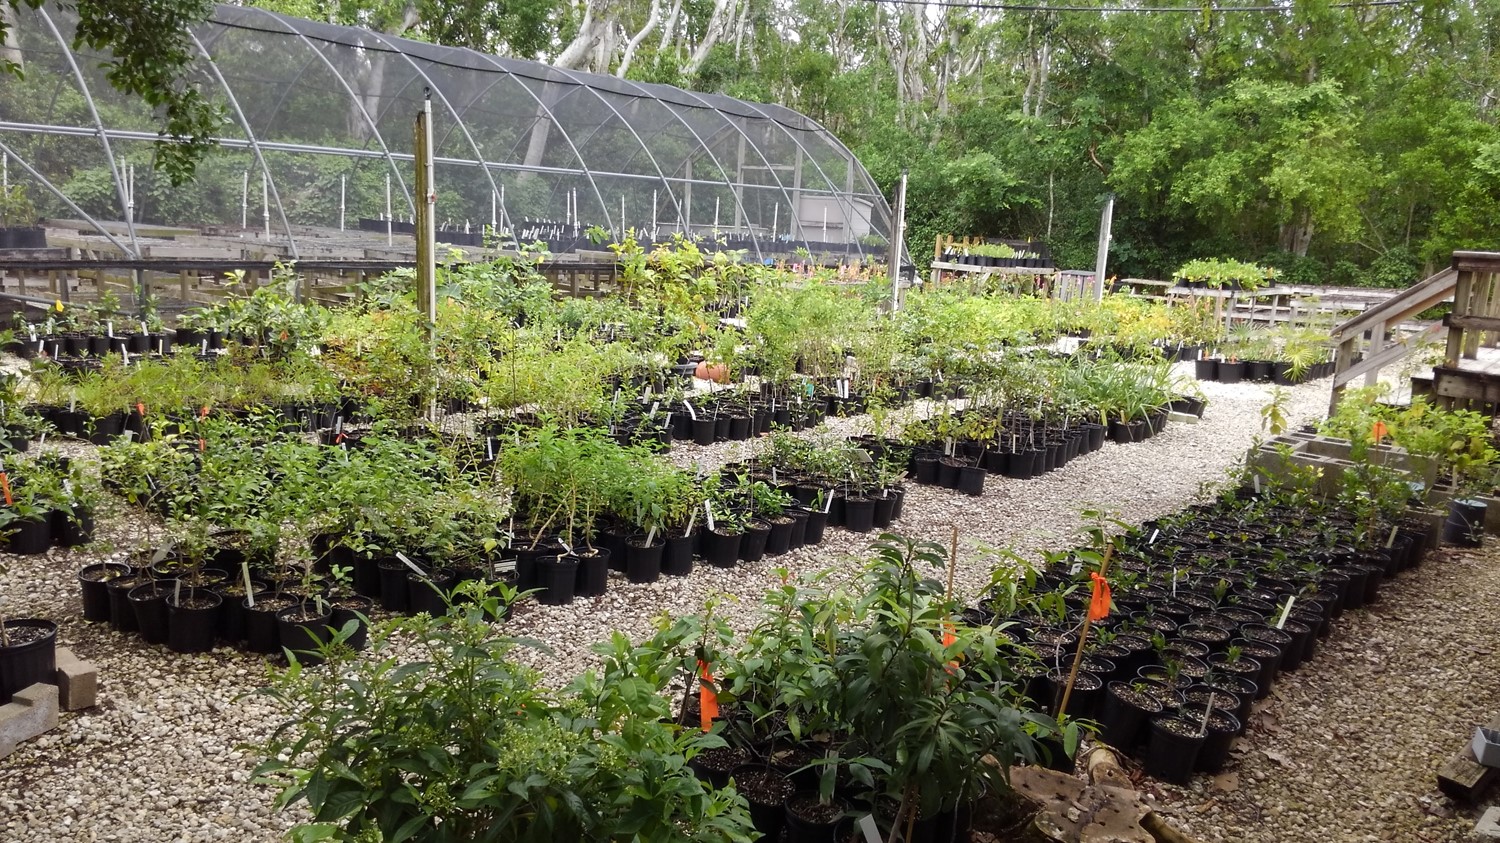 Native plants are grown at the Key Largo Hammock Nursery.